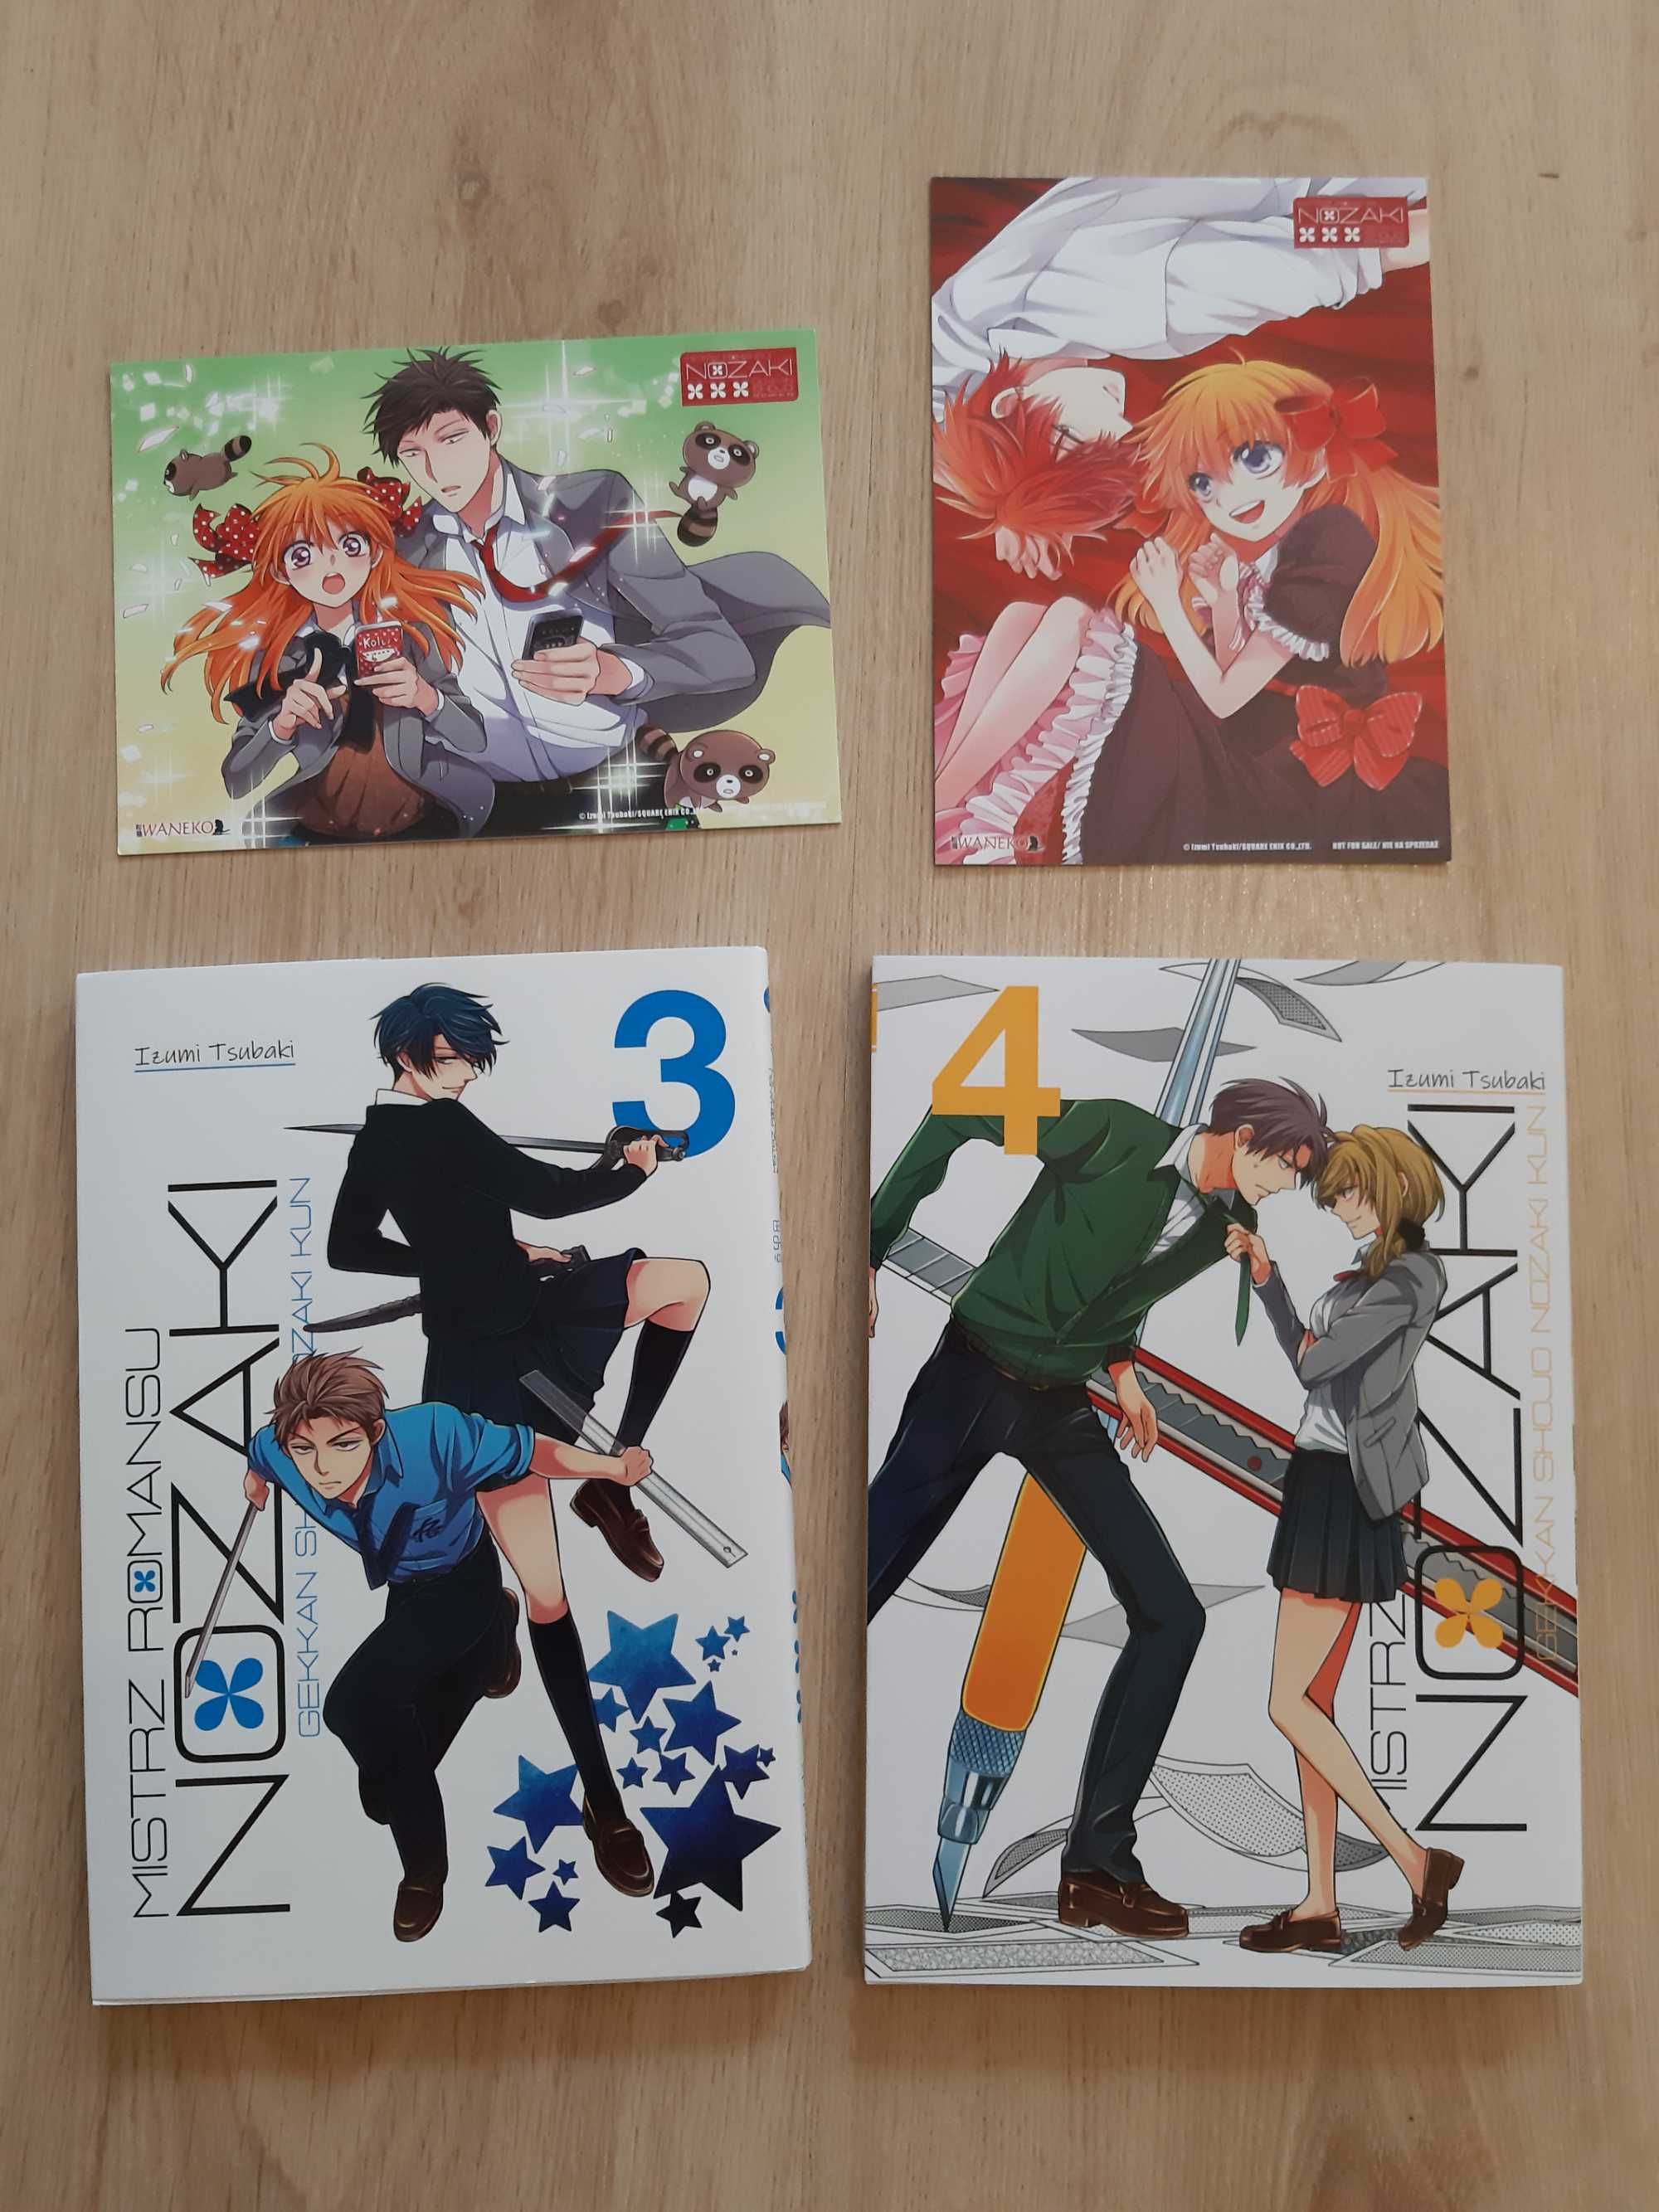 Manga Mistrz Romansu Nozaki tom 3 i 4 + pocztówki